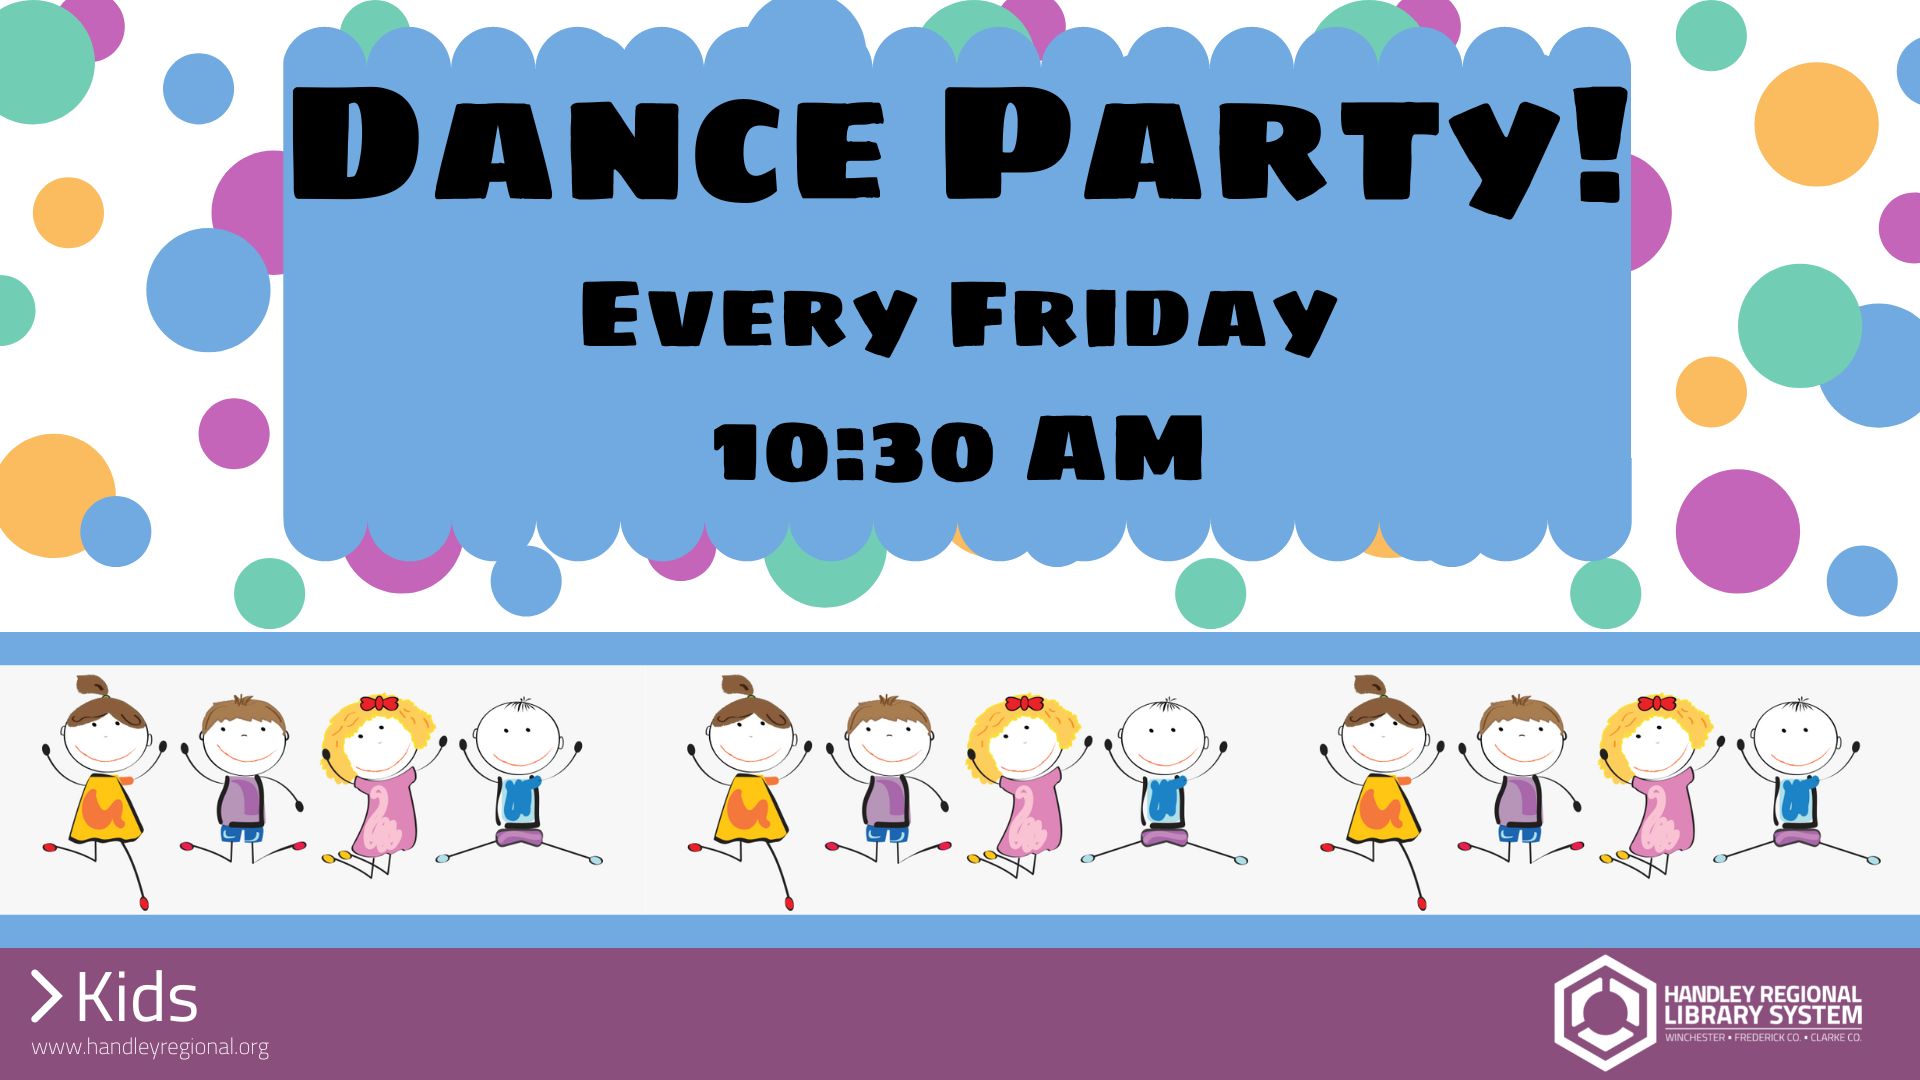 Dance Party slide